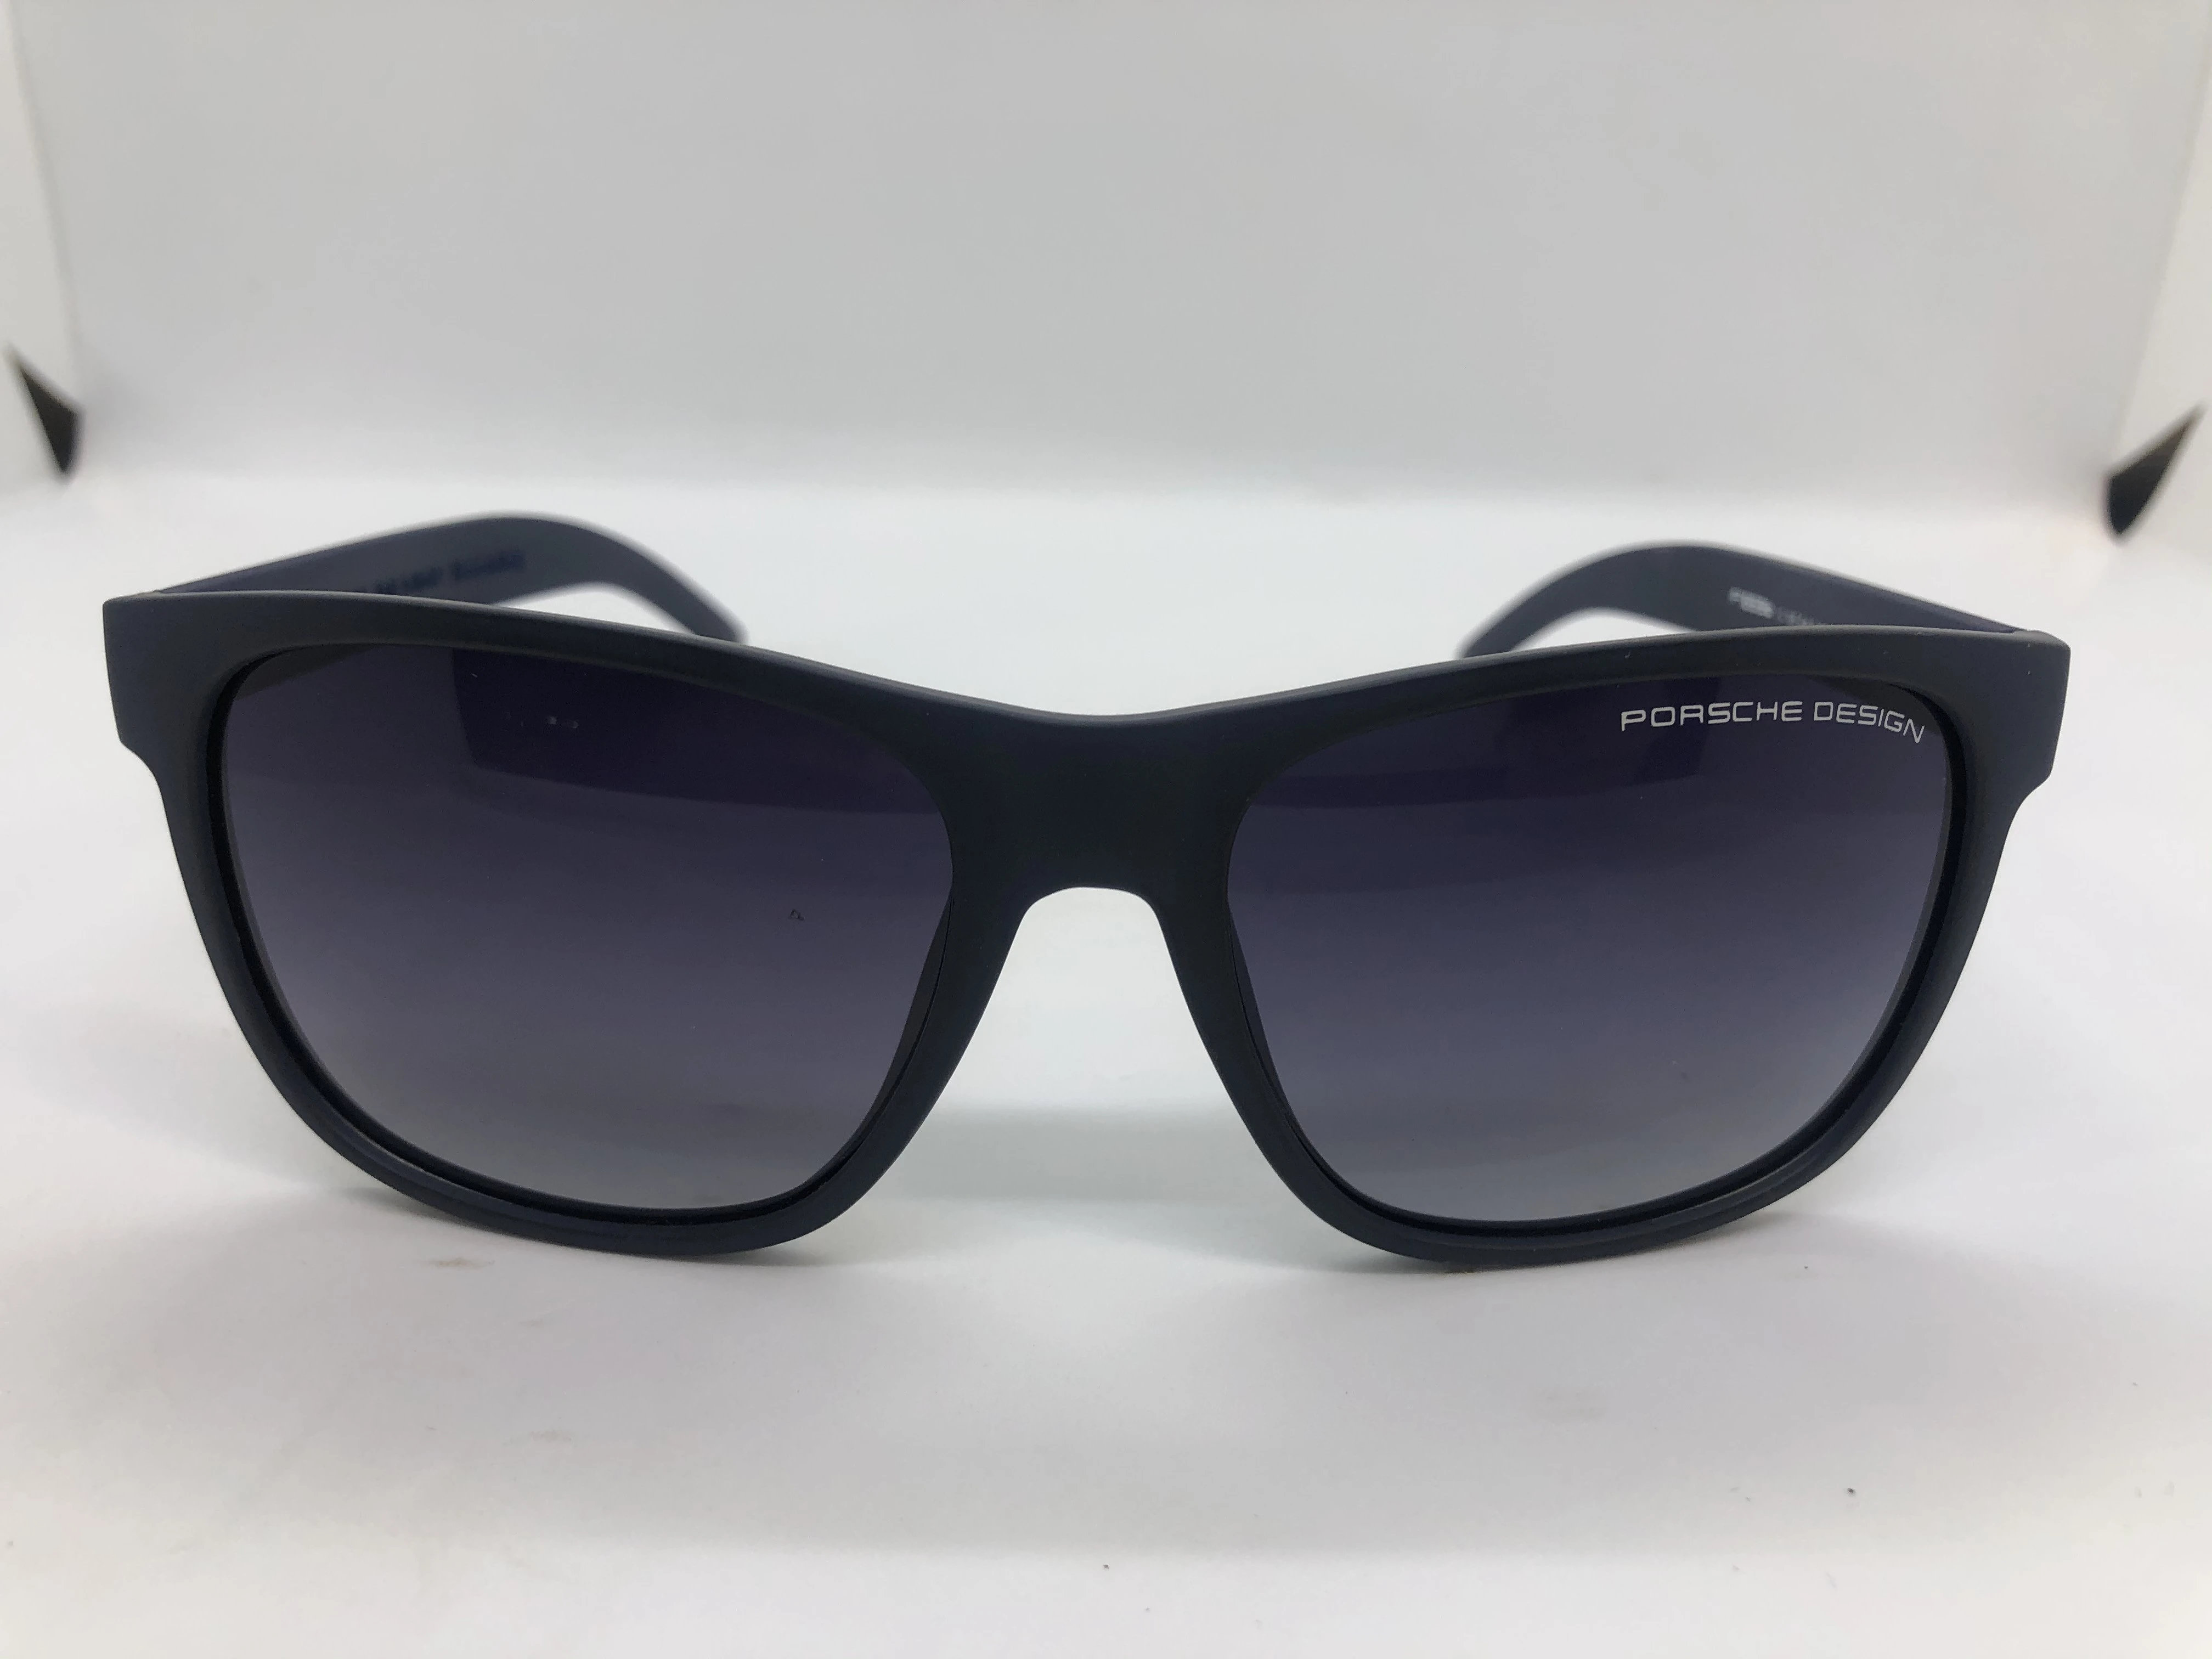 Sunglasses - Porsche Design - Polycarbonate Blue Frame - Dark Blue Gradient Lenses - Navy Blue Legging * Silver Metal - For Men